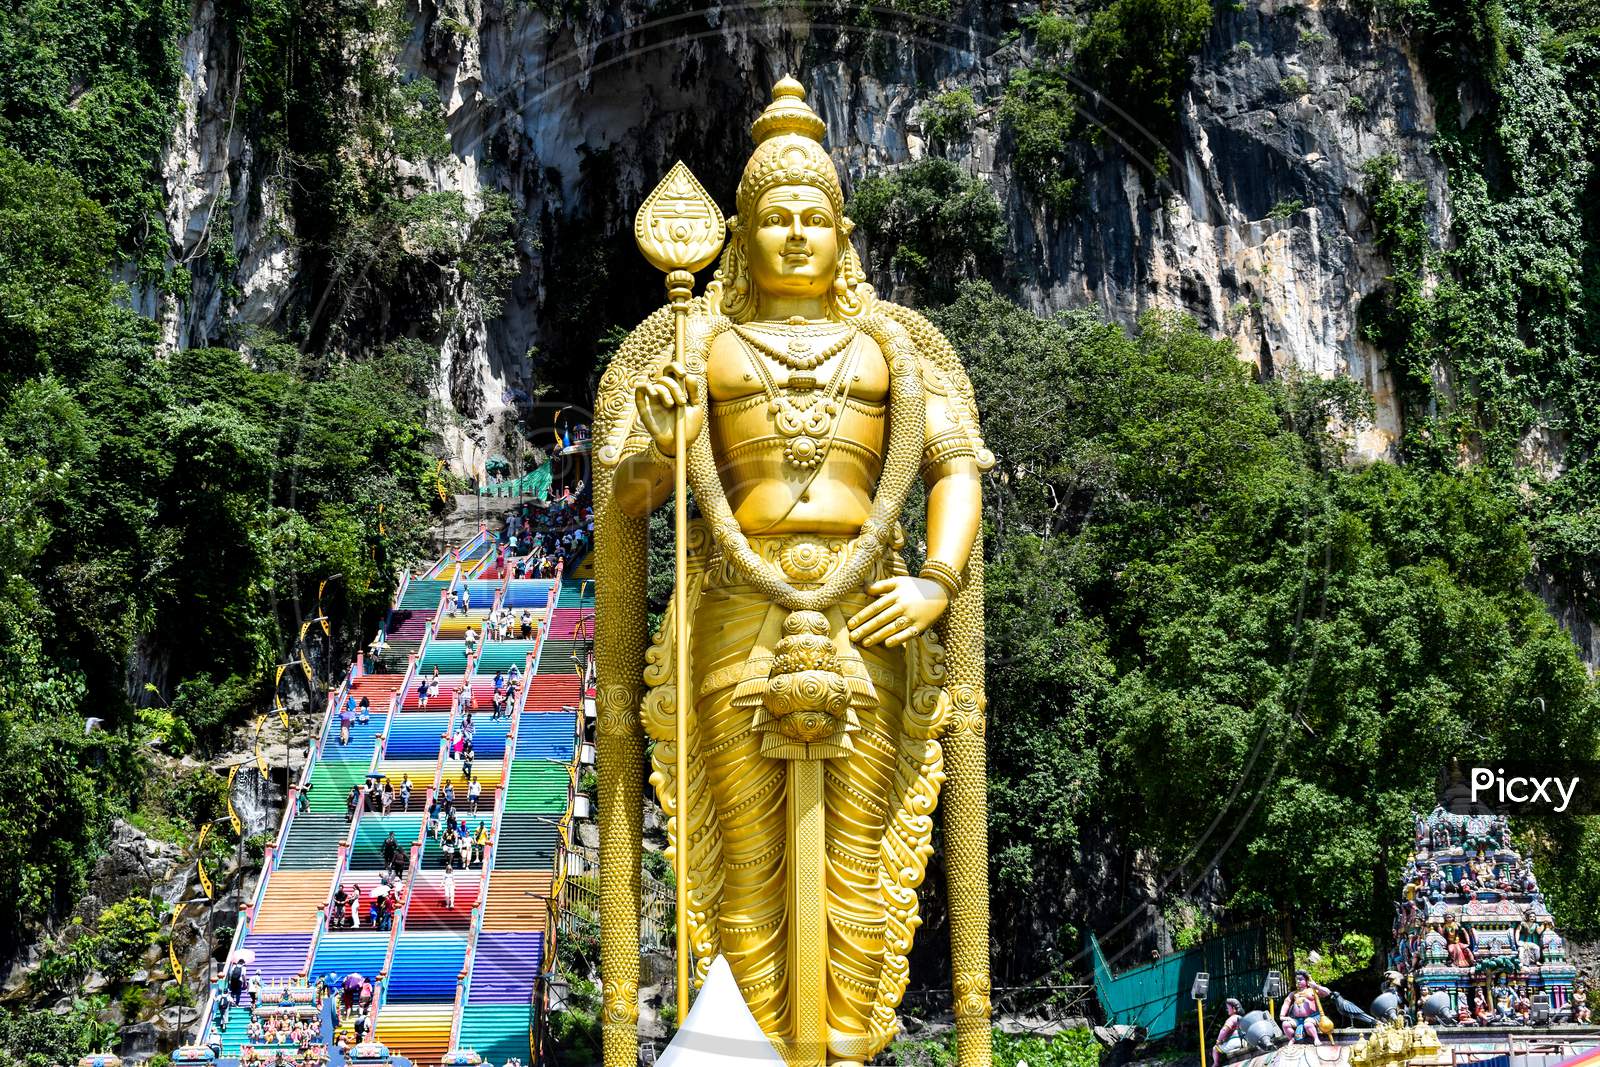 Big Statue Of Hindu Lord At Batu Caves Temple In Malaysia, Hindu Religion Lord Big View At Batu Caves